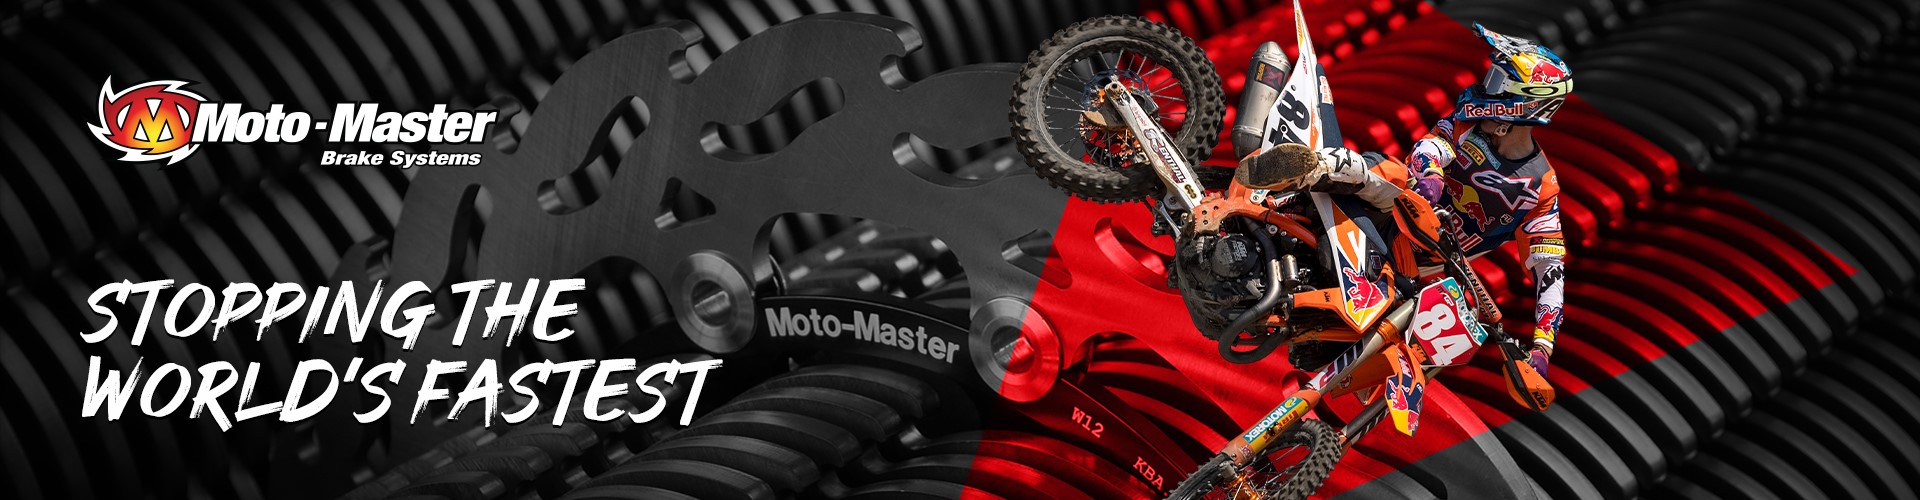 MotoMaster Performance Brakes